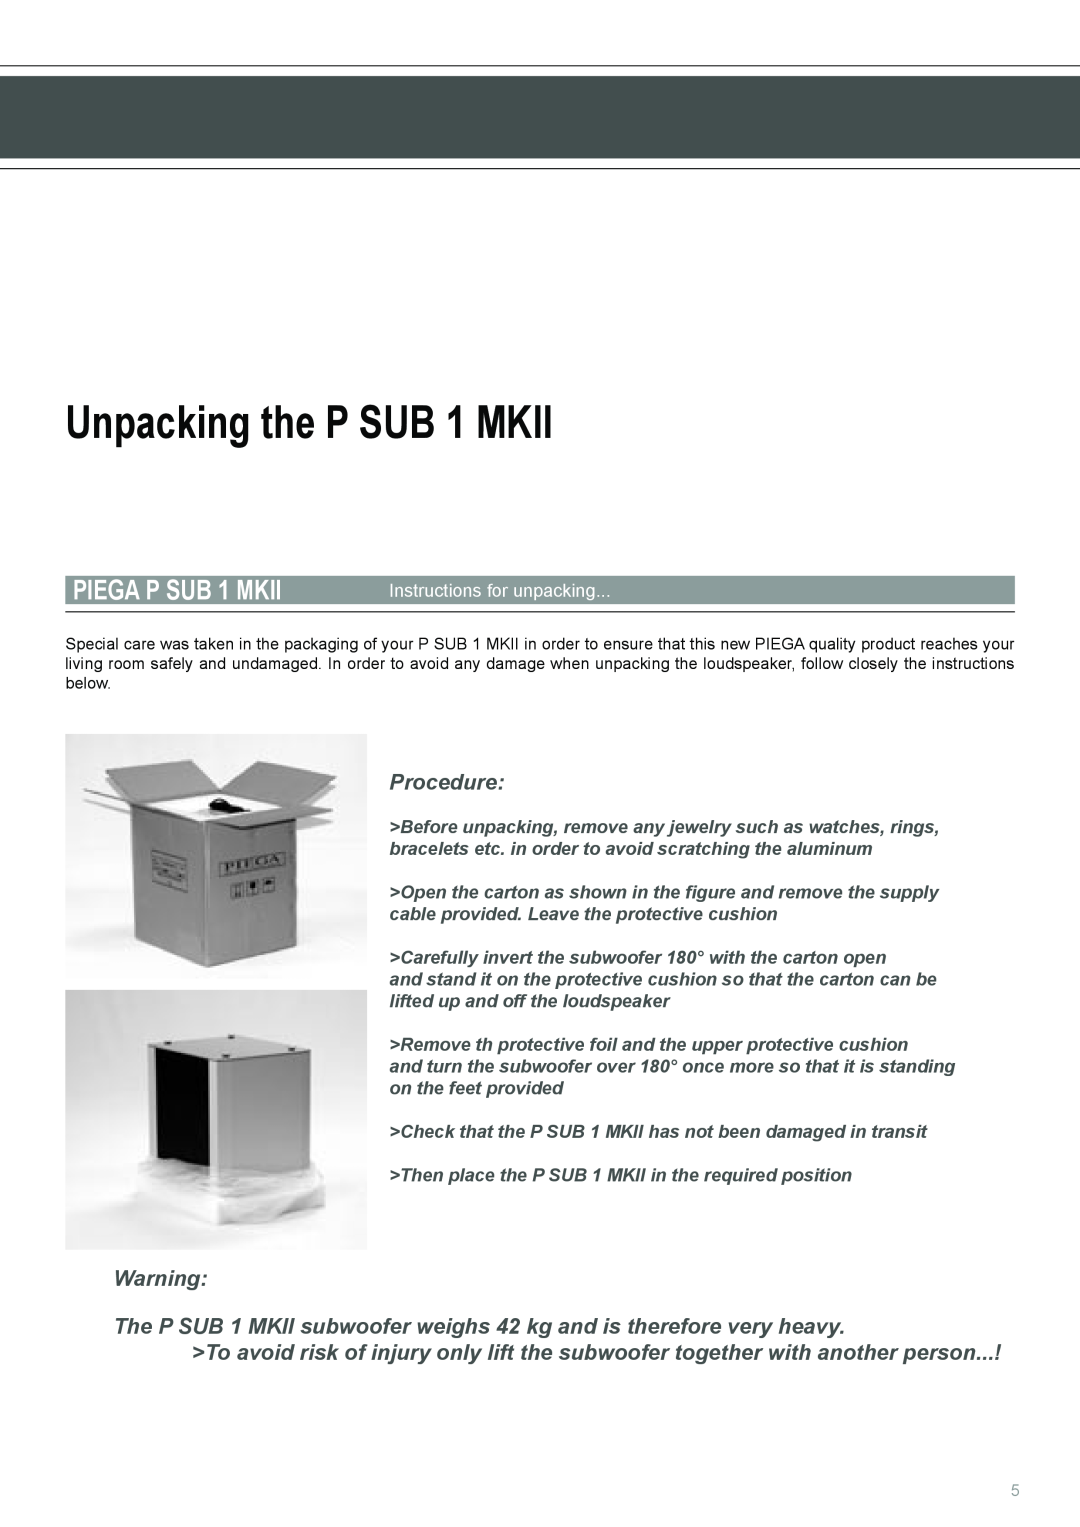 Piega user manual Unpacking the P SUB 1 MKII, Procedure, PIEGA P SUB 1 MKII 